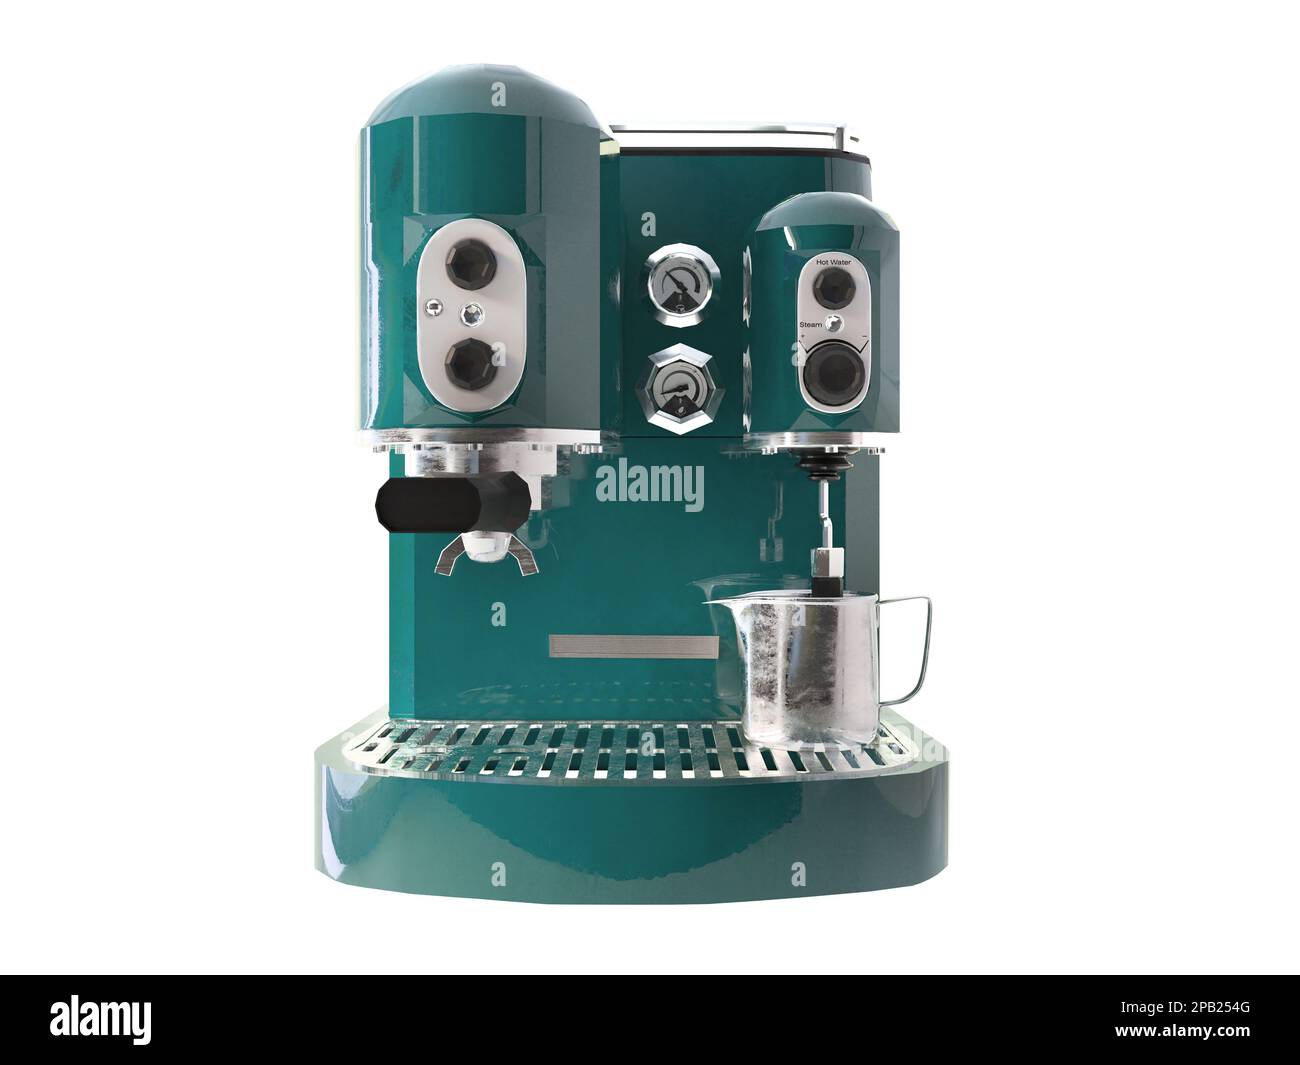 https://c8.alamy.com/comp/2PB254G/coffee-machine-isolated-on-white-background-retro-dark-green-color-electric-coffee-maker-3d-render-illustration-2PB254G.jpg